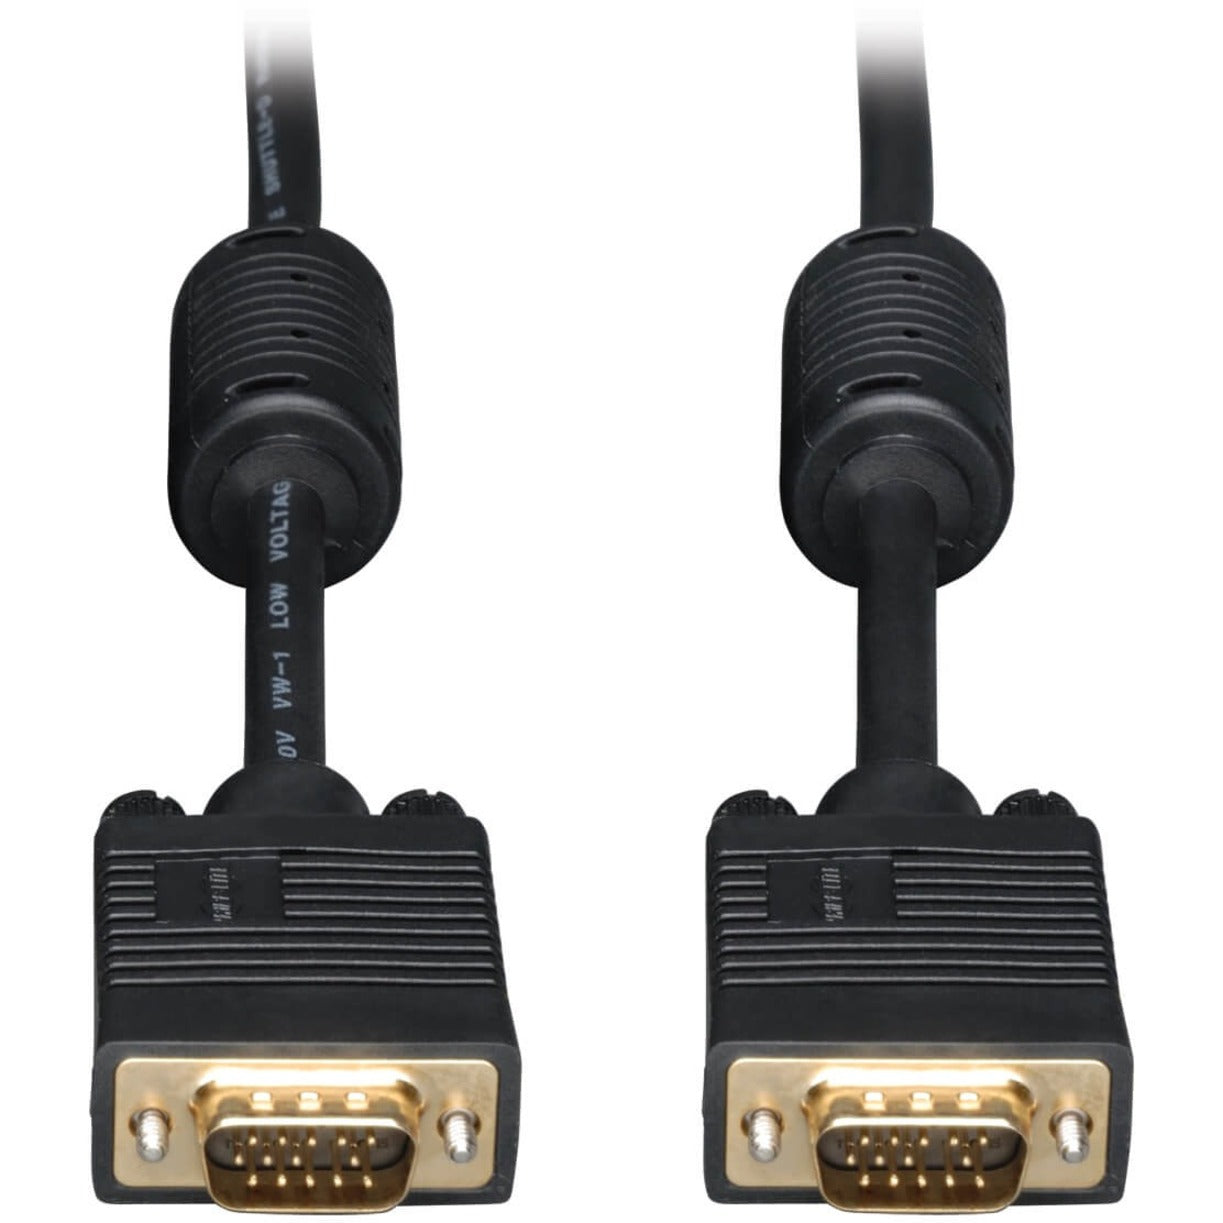 Tripp Lite P502-025 Video Cable, 25FT SVGA/VGA REPL MONITOR CABLE HD15M/M GOLD W/ RGB COAX